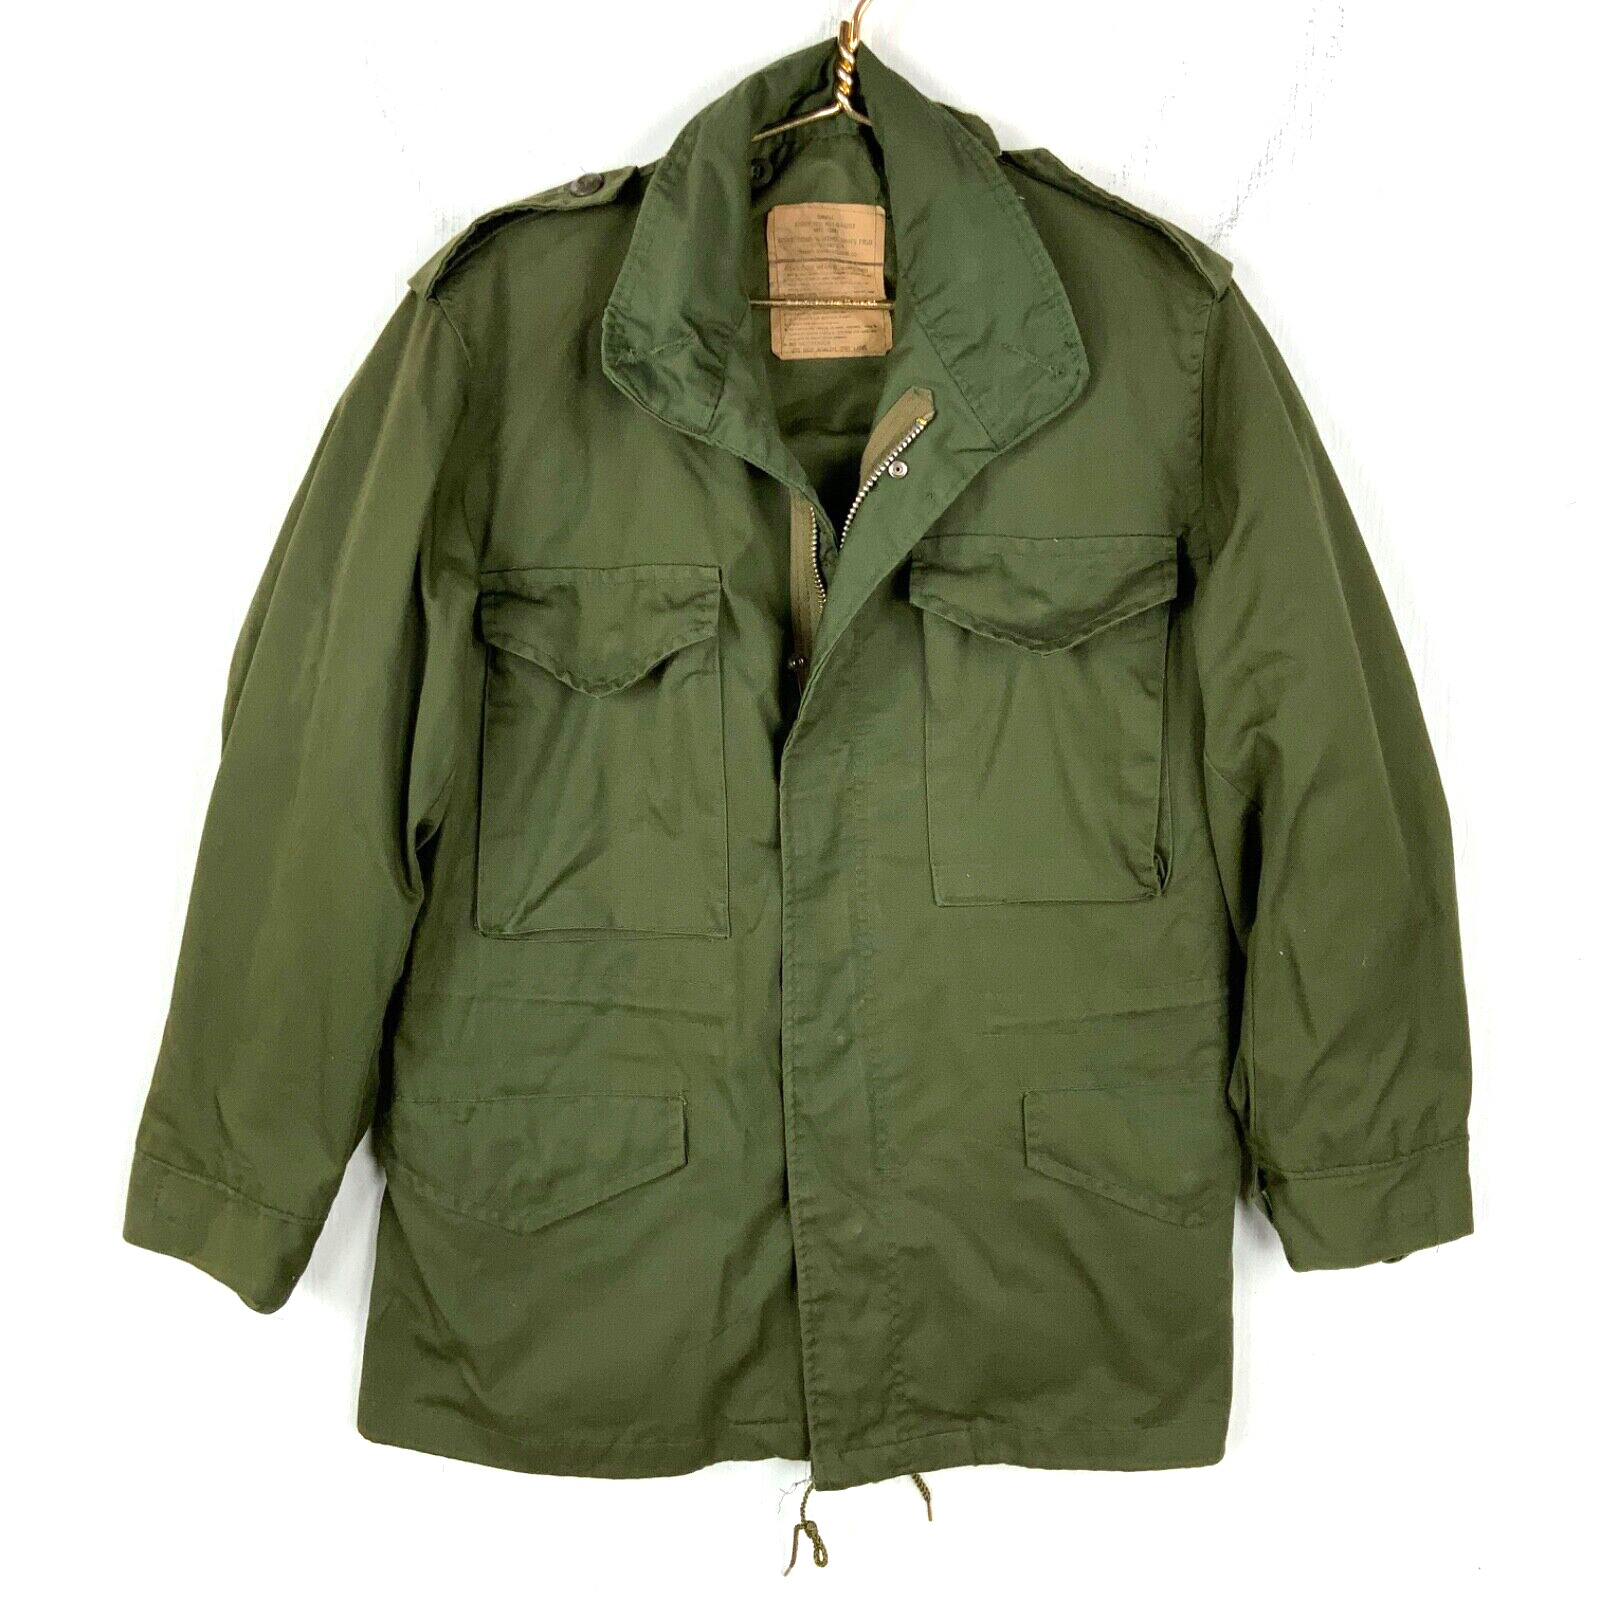 Vintage Military Field Jacket Small Green Lined Full Zip Vietnam Era 60s 70s